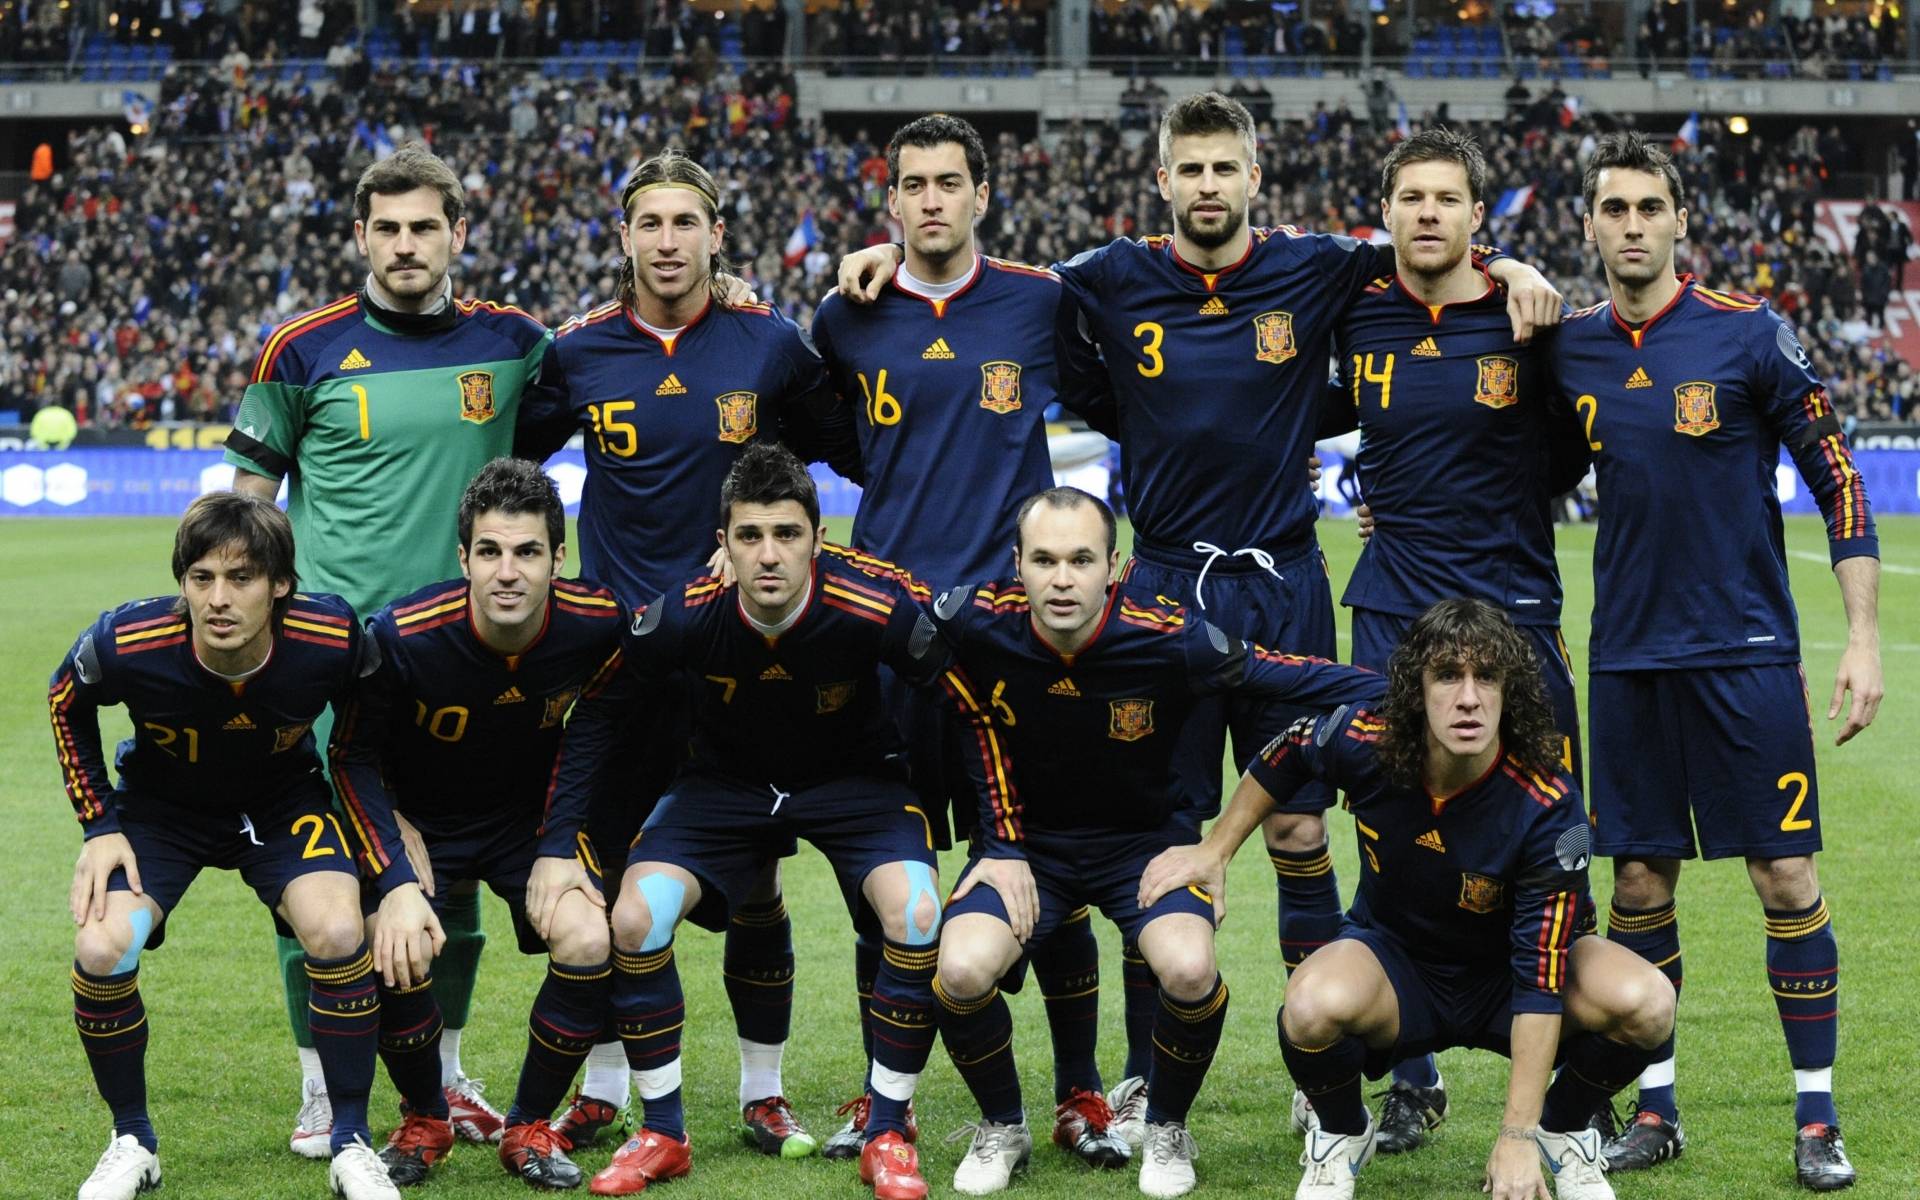 Spain Football Team Wallpaper. Spain Football Team Image. New